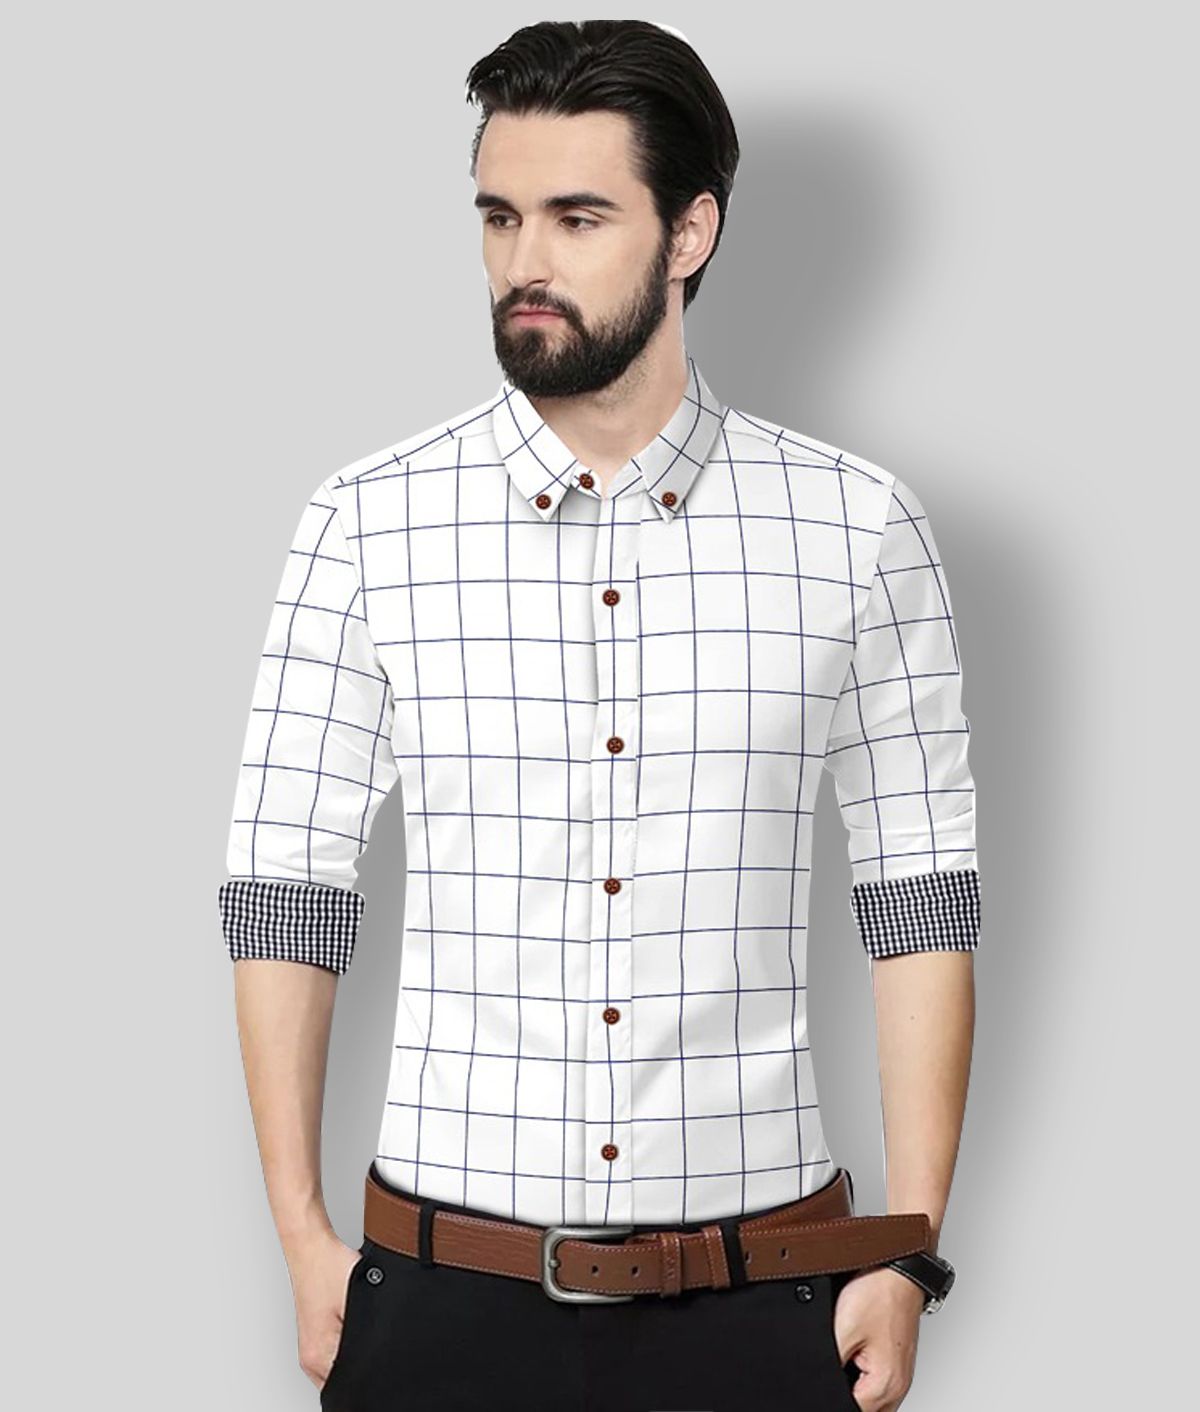 P&V - White Cotton Blend Regular Fit Men's Casual Shirt (Pack of 1)